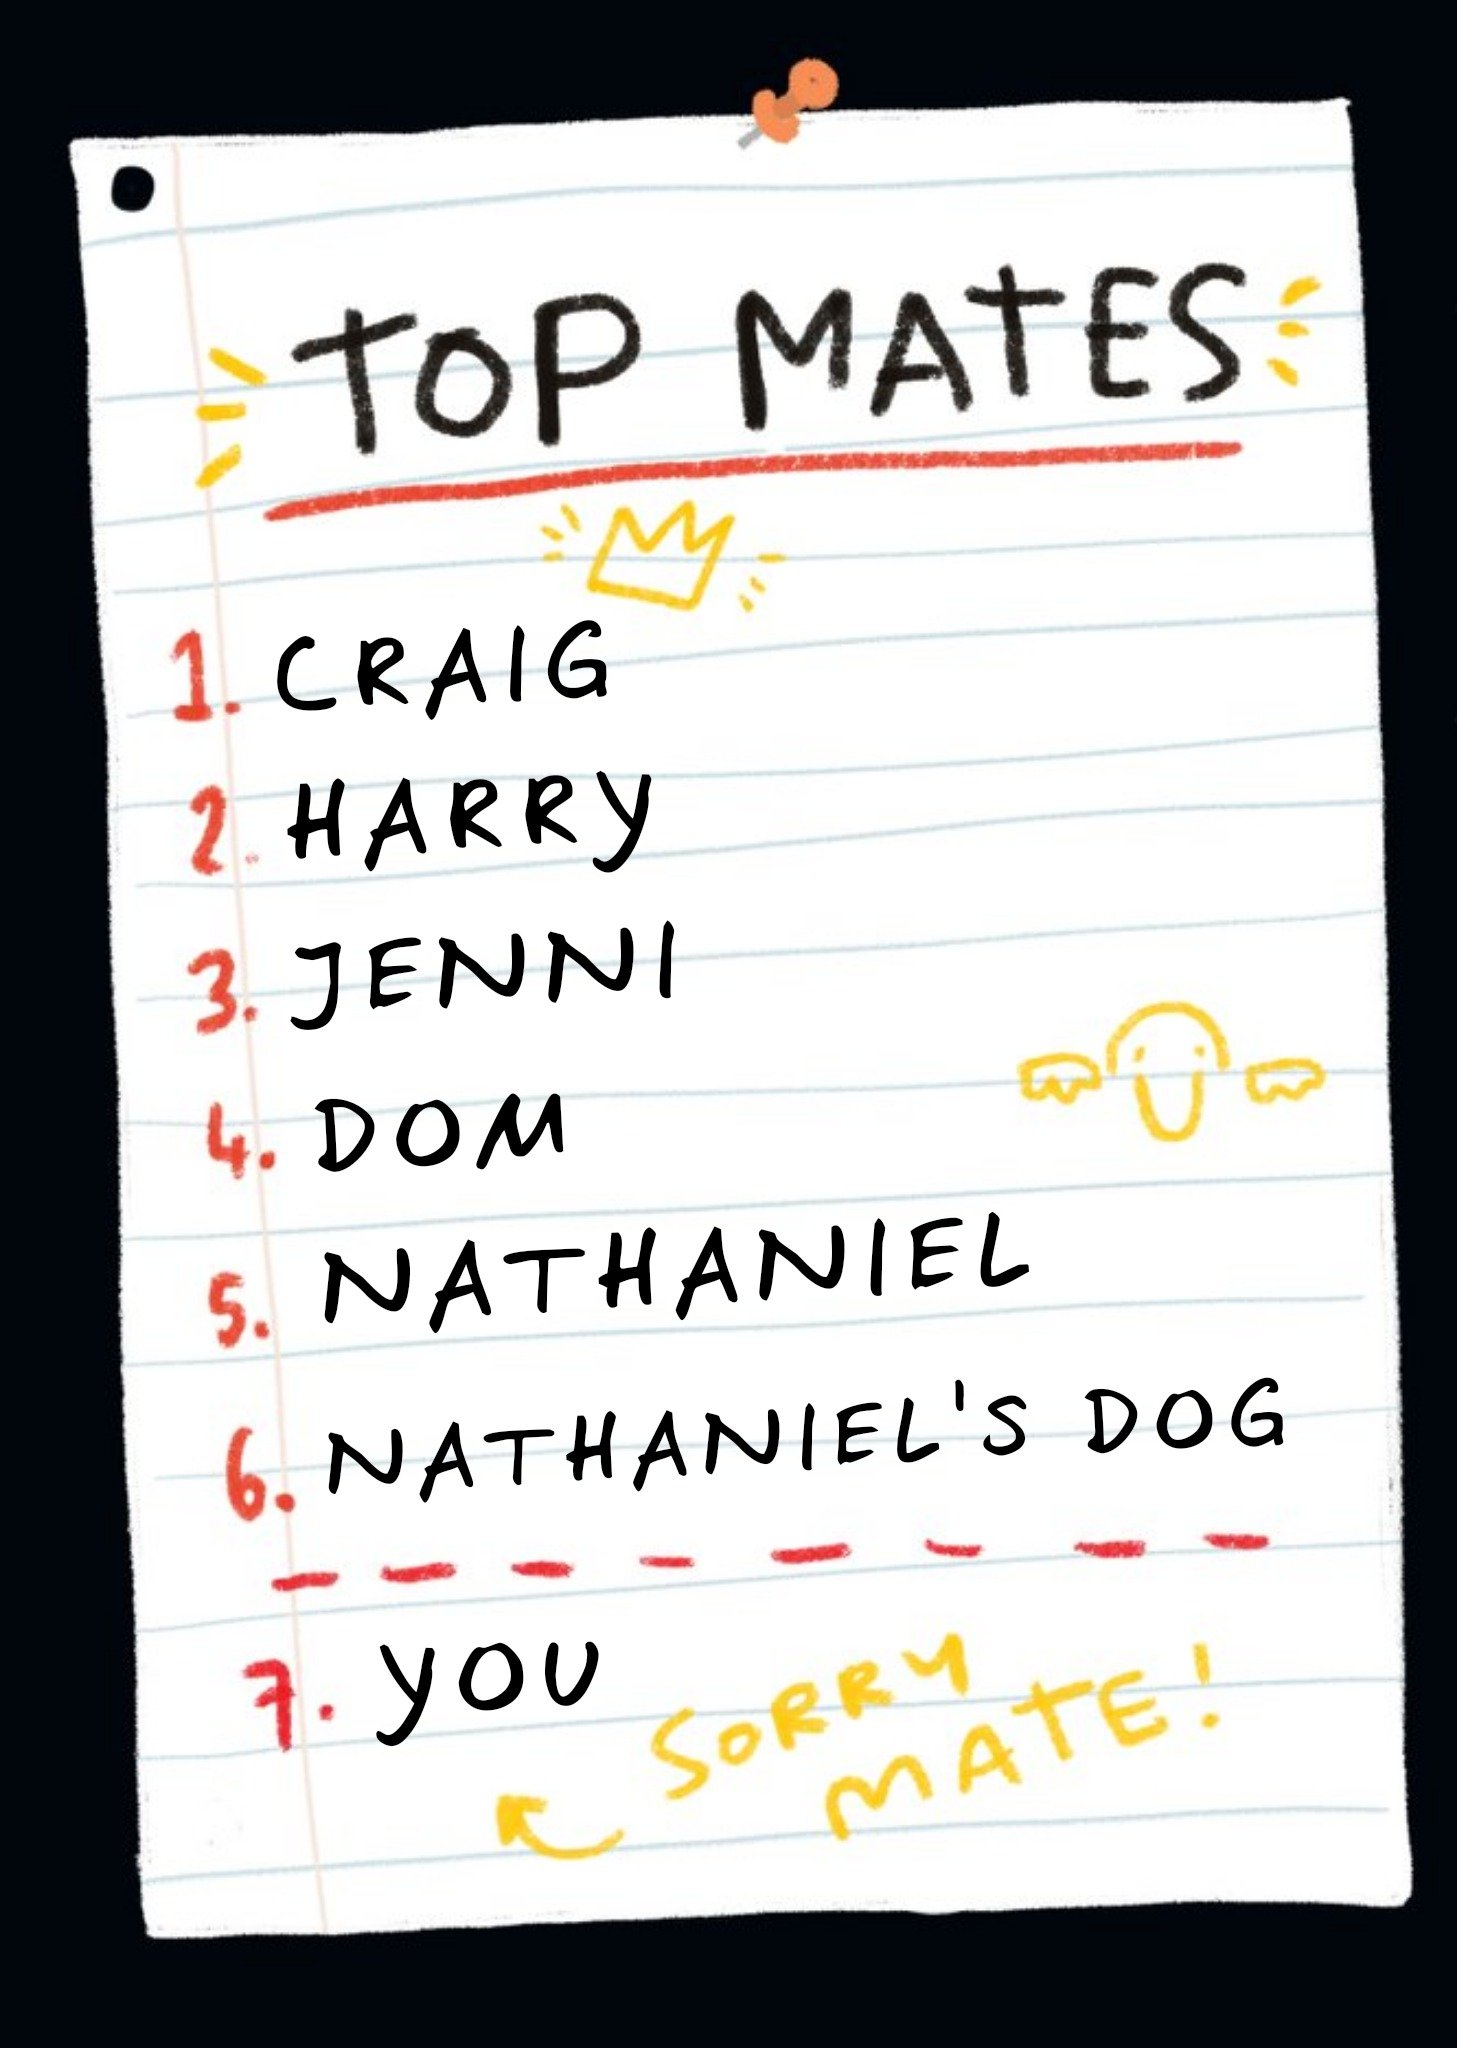 Moonpig Top Mates Sorry Mate Funny Card, Large